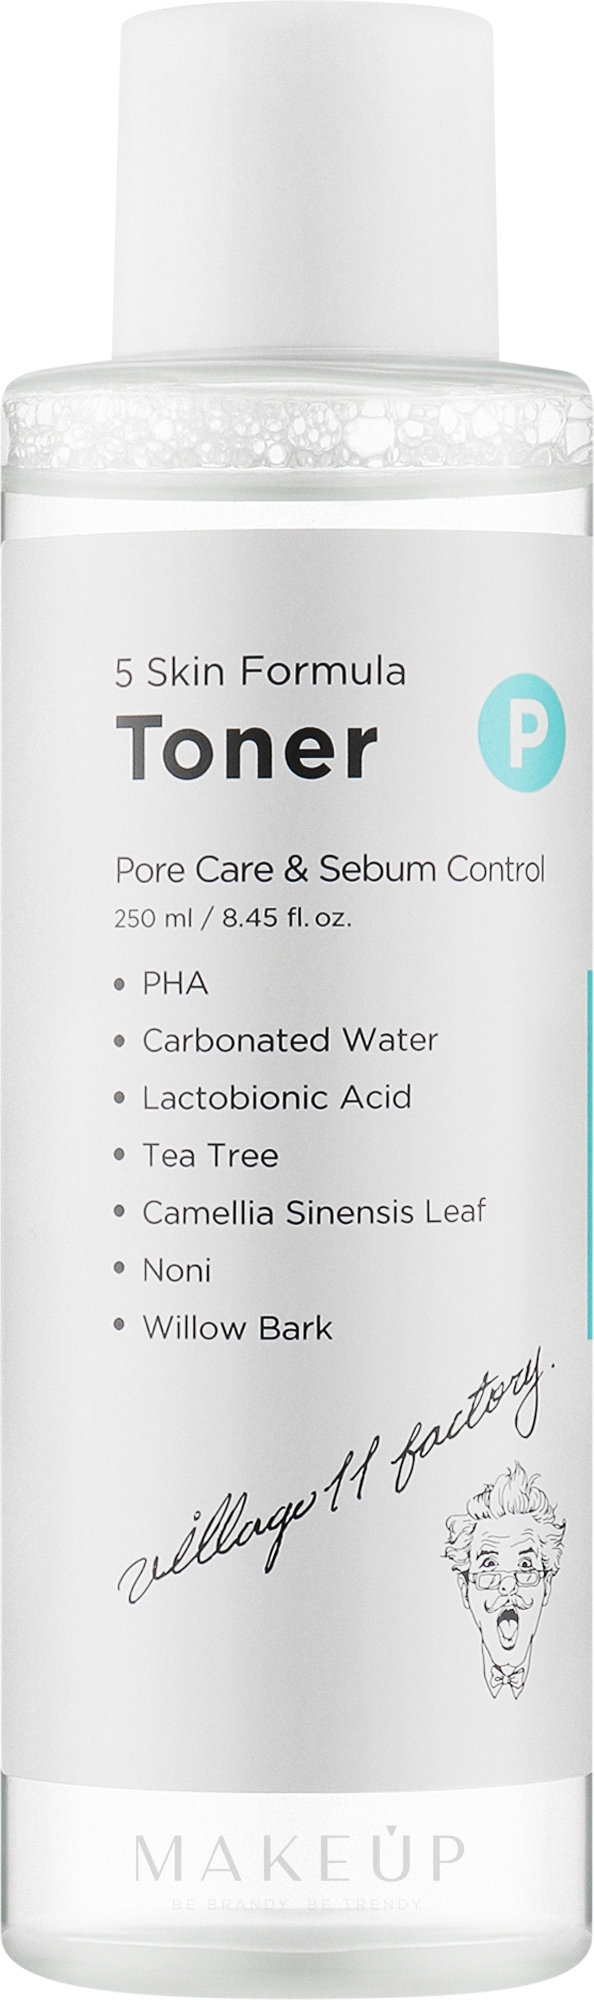 Porenstraffender Toner - Village 11 Factory P Skin Formula Toner — Bild 250 ml